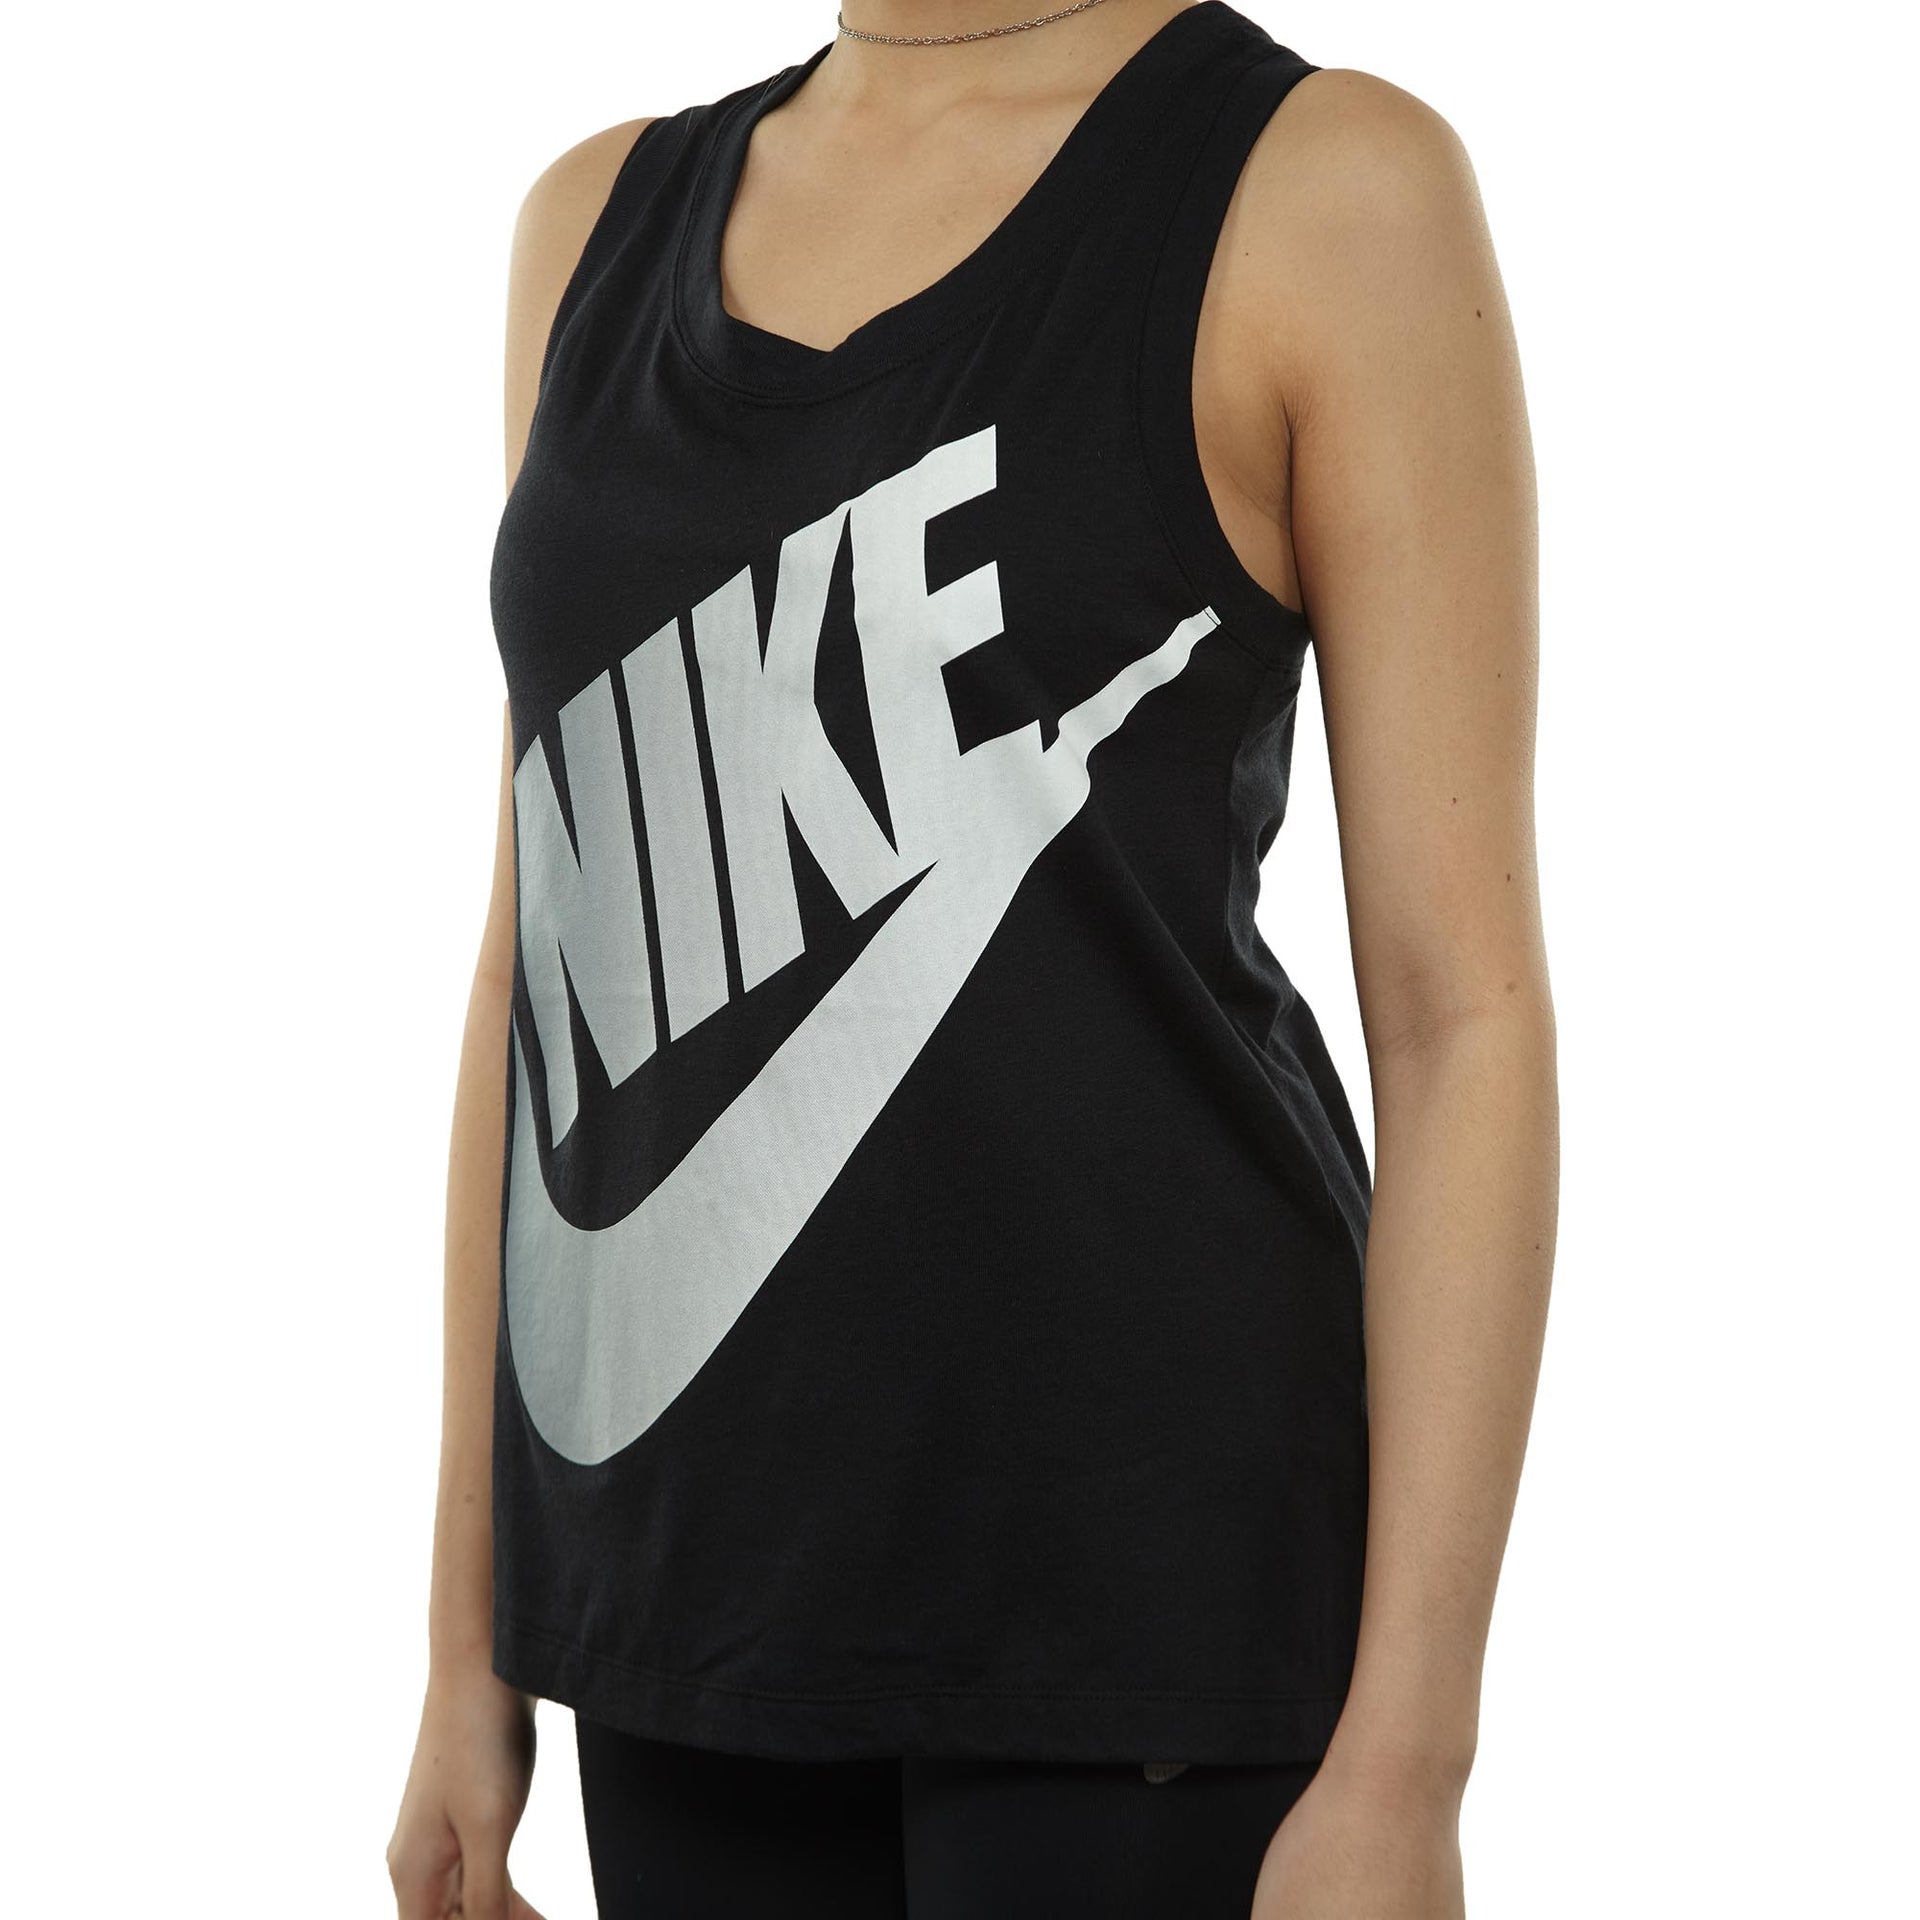 Nike Logo Futura Tank Womens Style : 890754-010